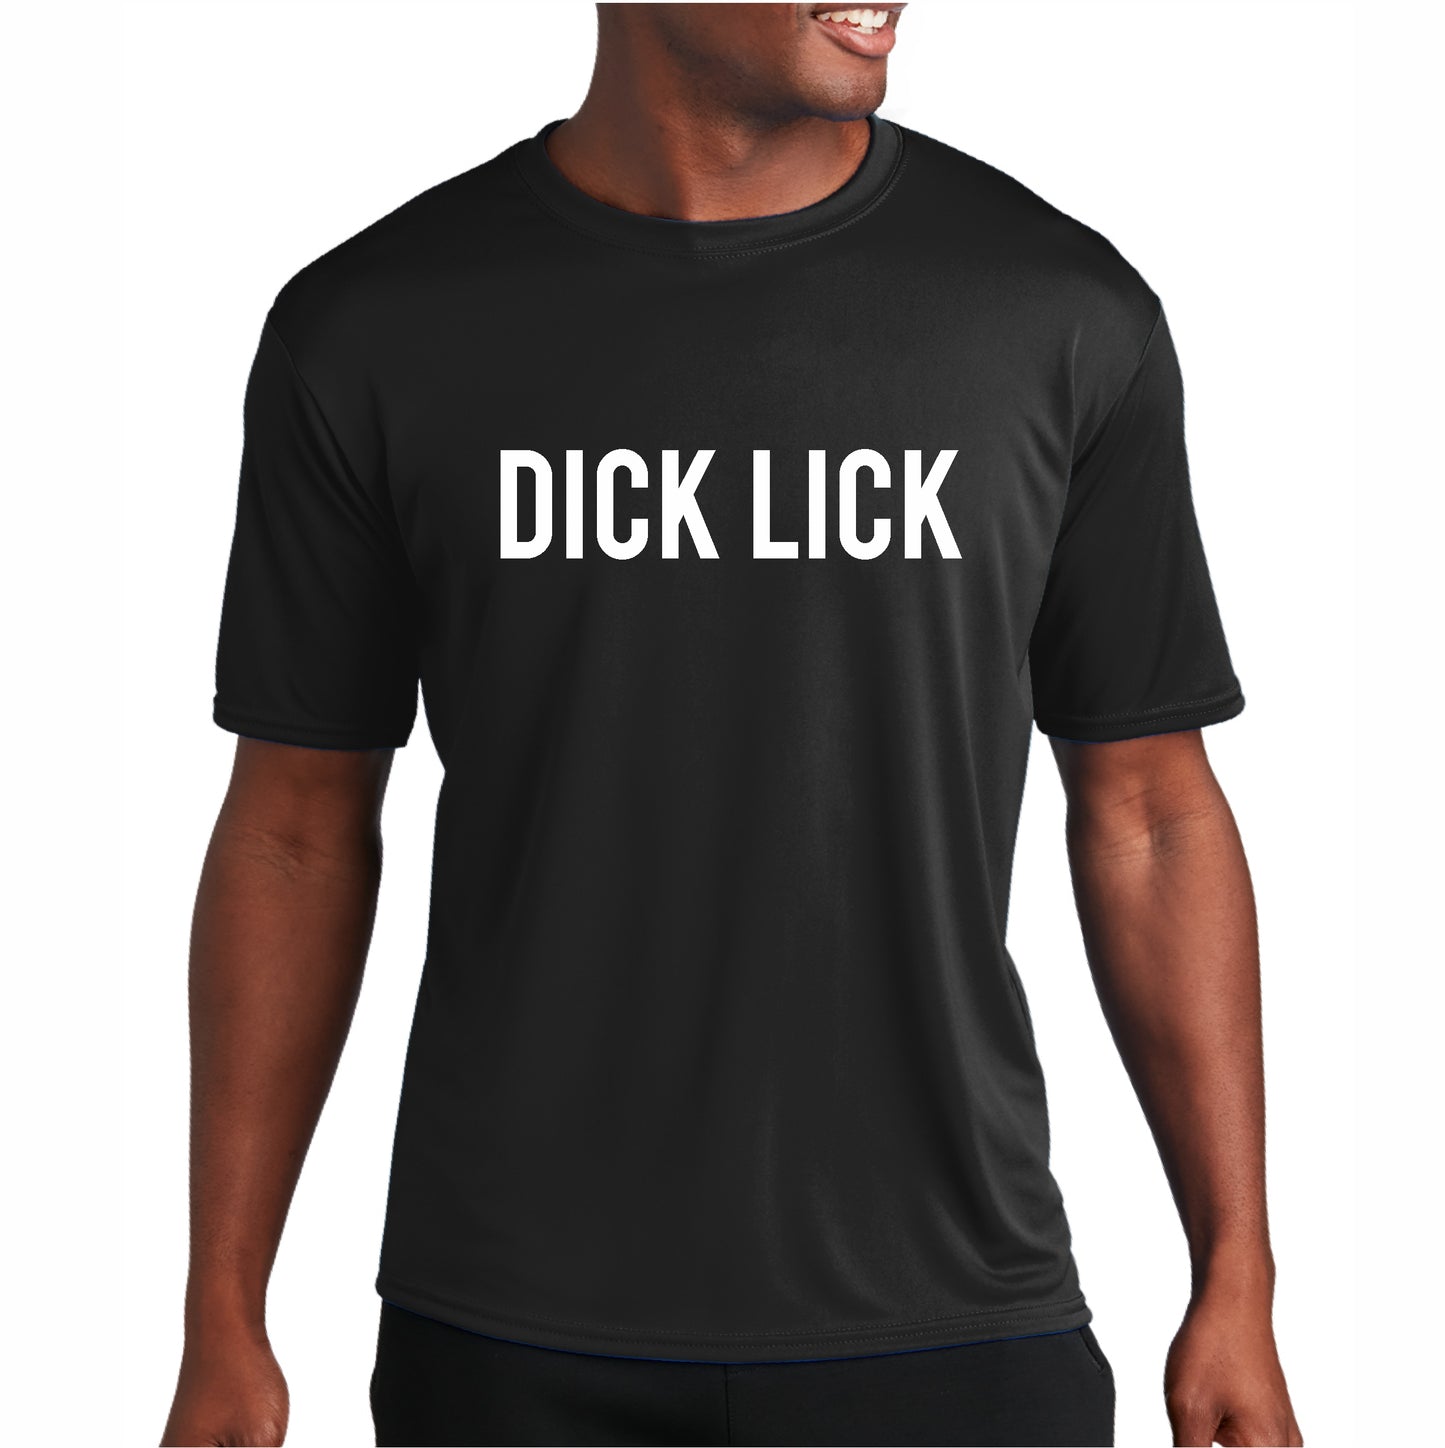 Dick Lick Tee